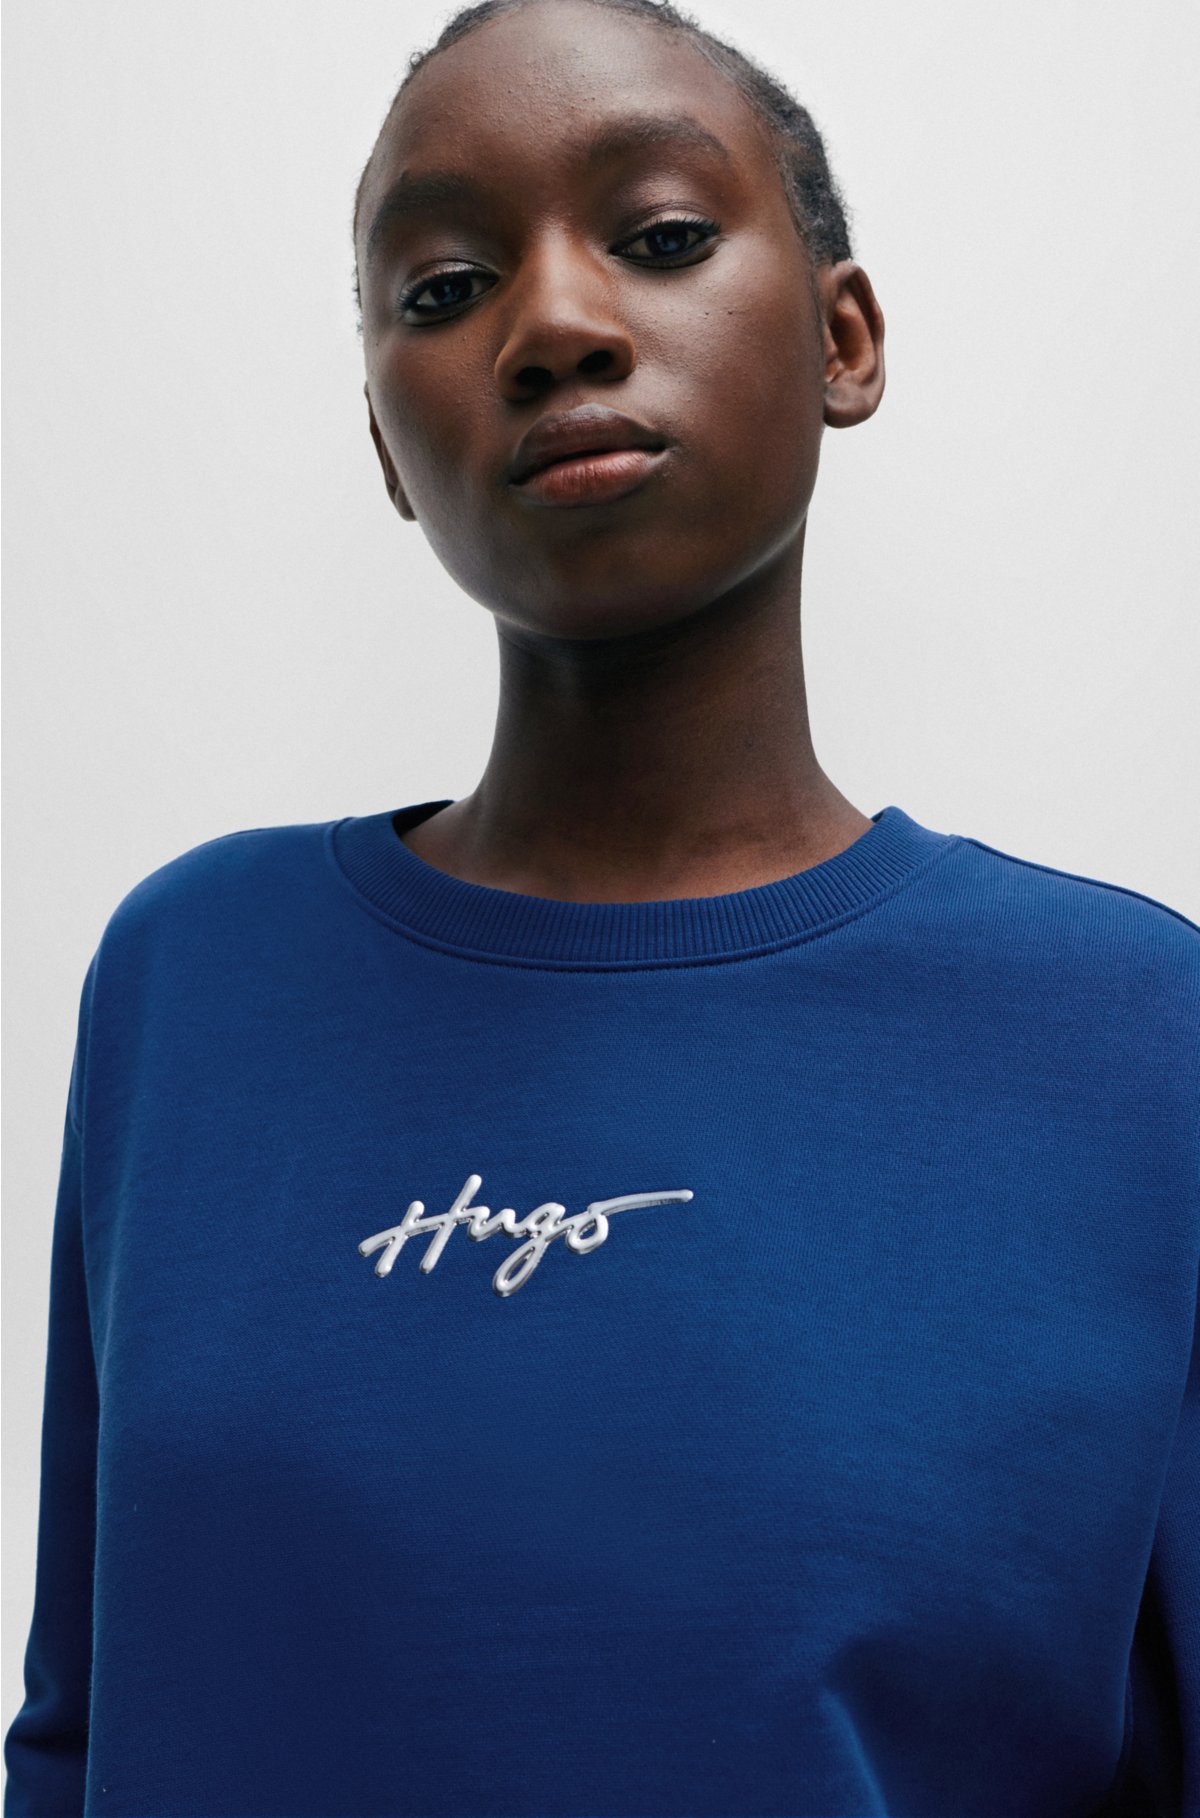 Relaxed-fit sweatshirt with metallic-effect handwritten logo, Blue